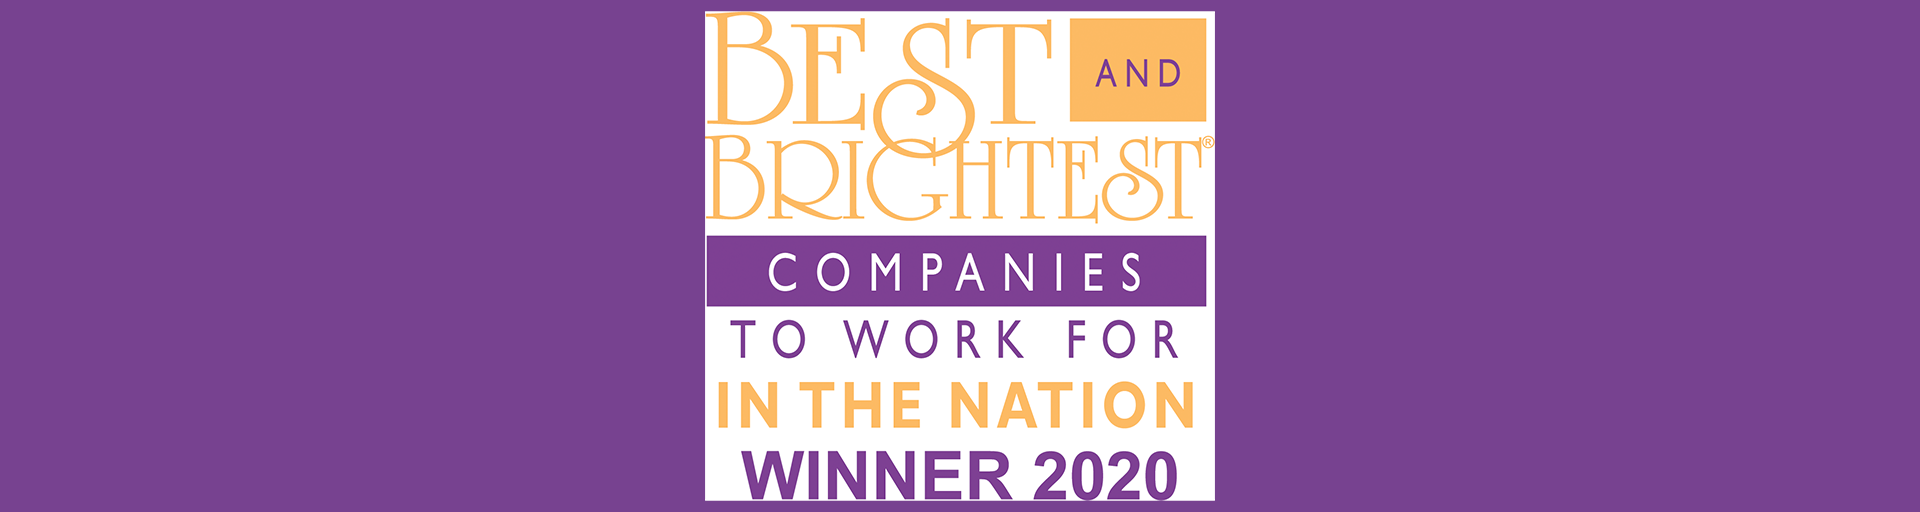 Best And Brightest 2020 Nation Winner